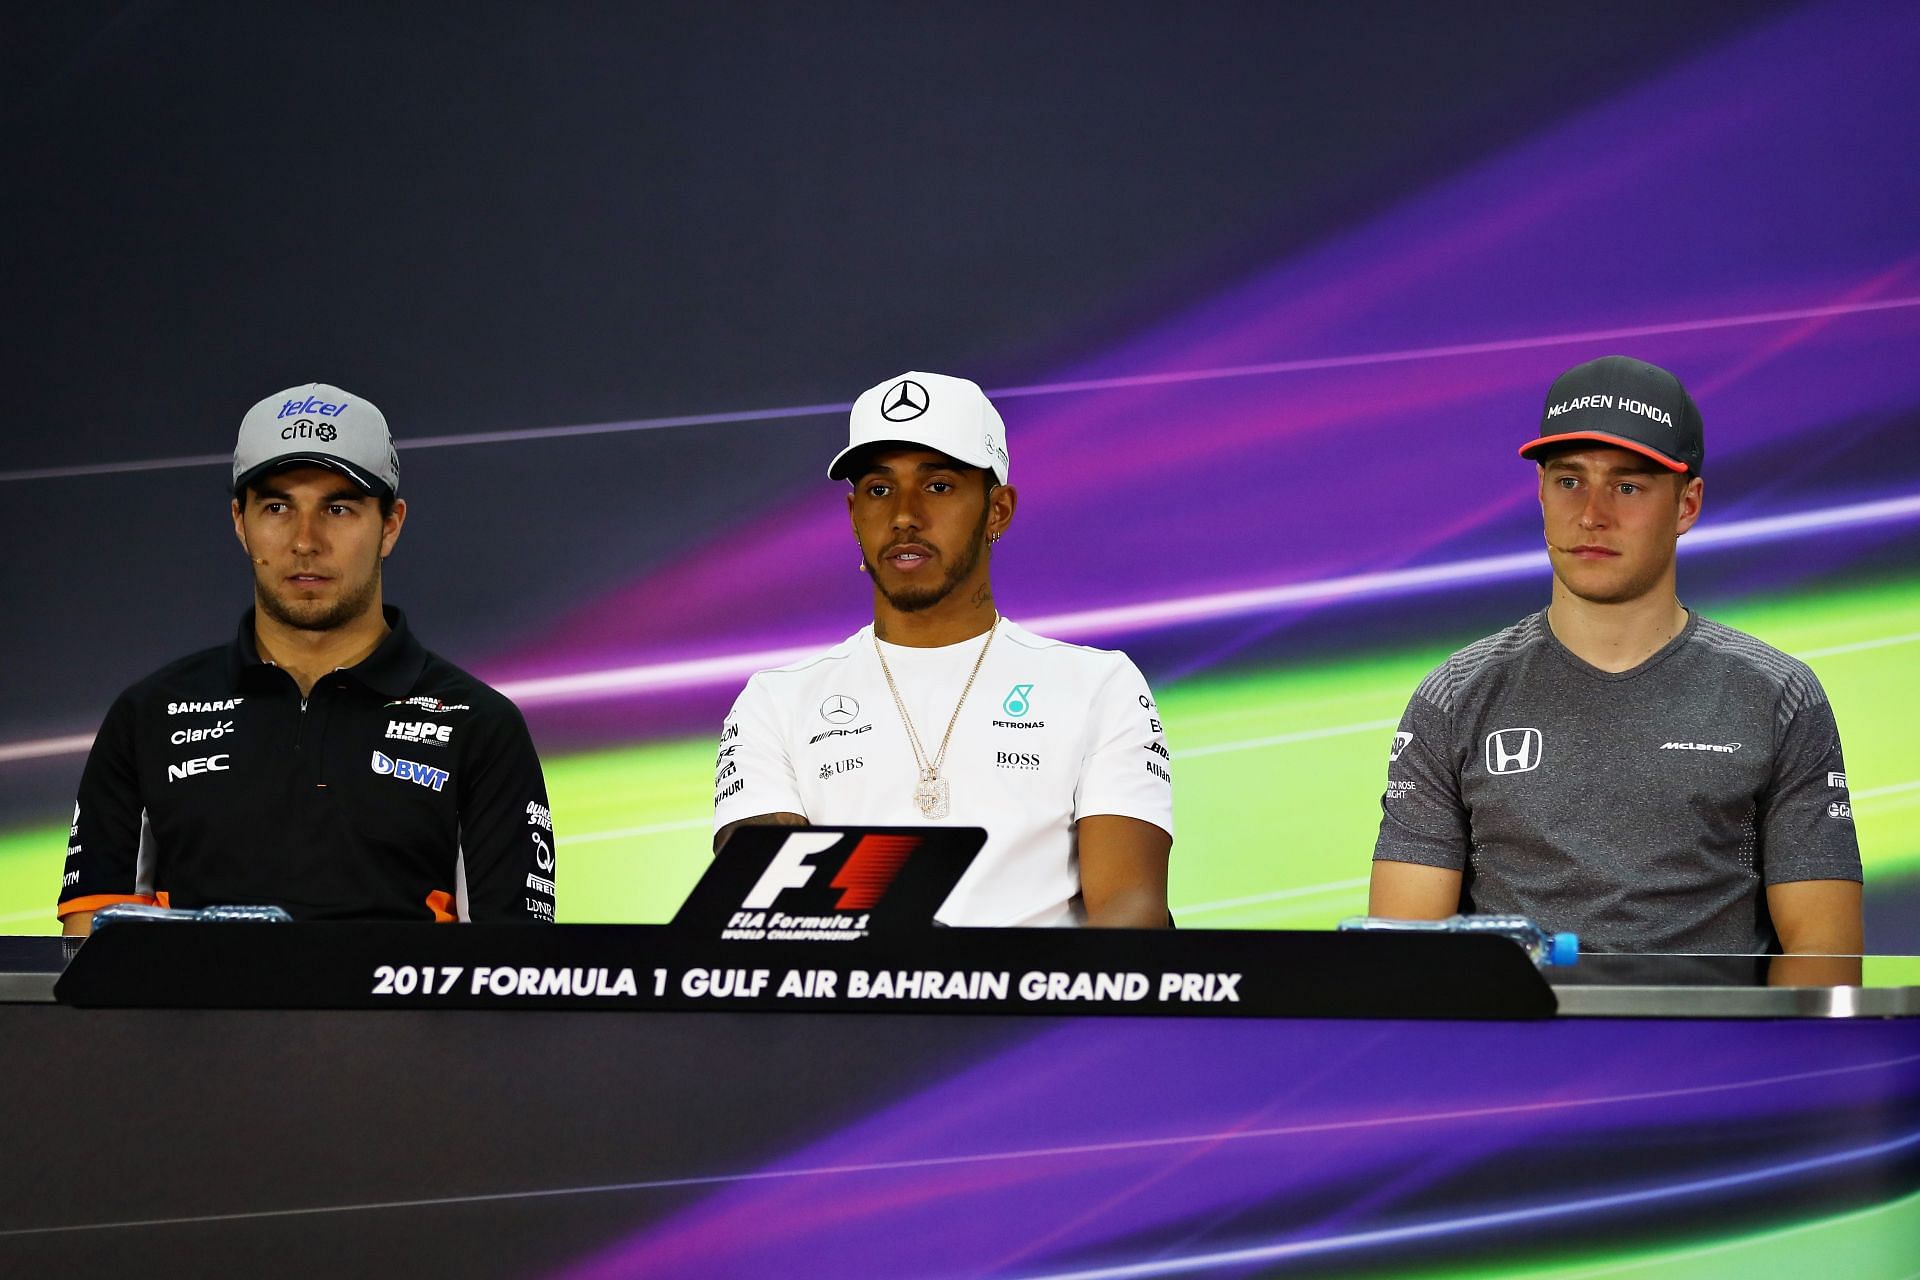 F1 Grand Prix of Bahrain - Lewis Hamilton and Stoffel Vandoorne talk to the press